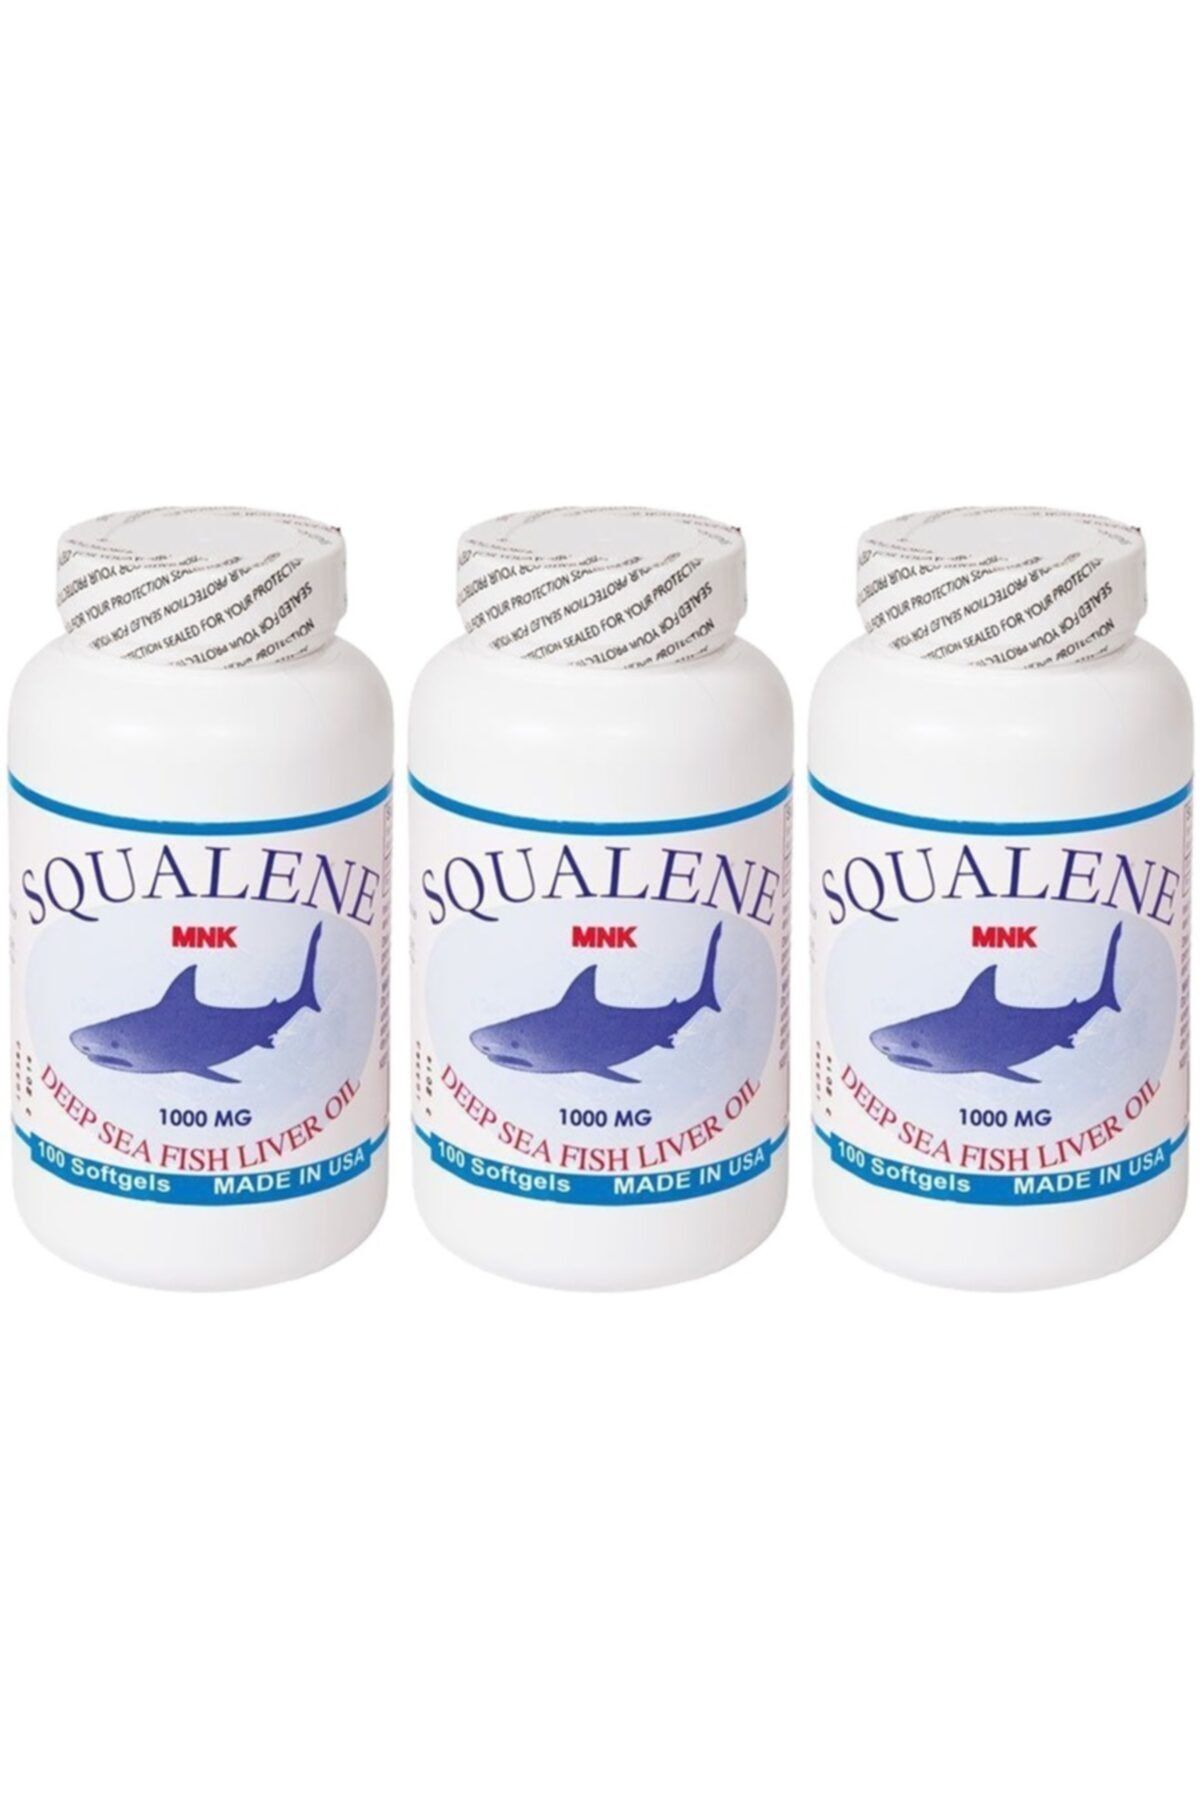 Mnk Squalene Köpek Balığı Karaciğer Yağı 1000 mg 100 Softgel x 3 Kutu